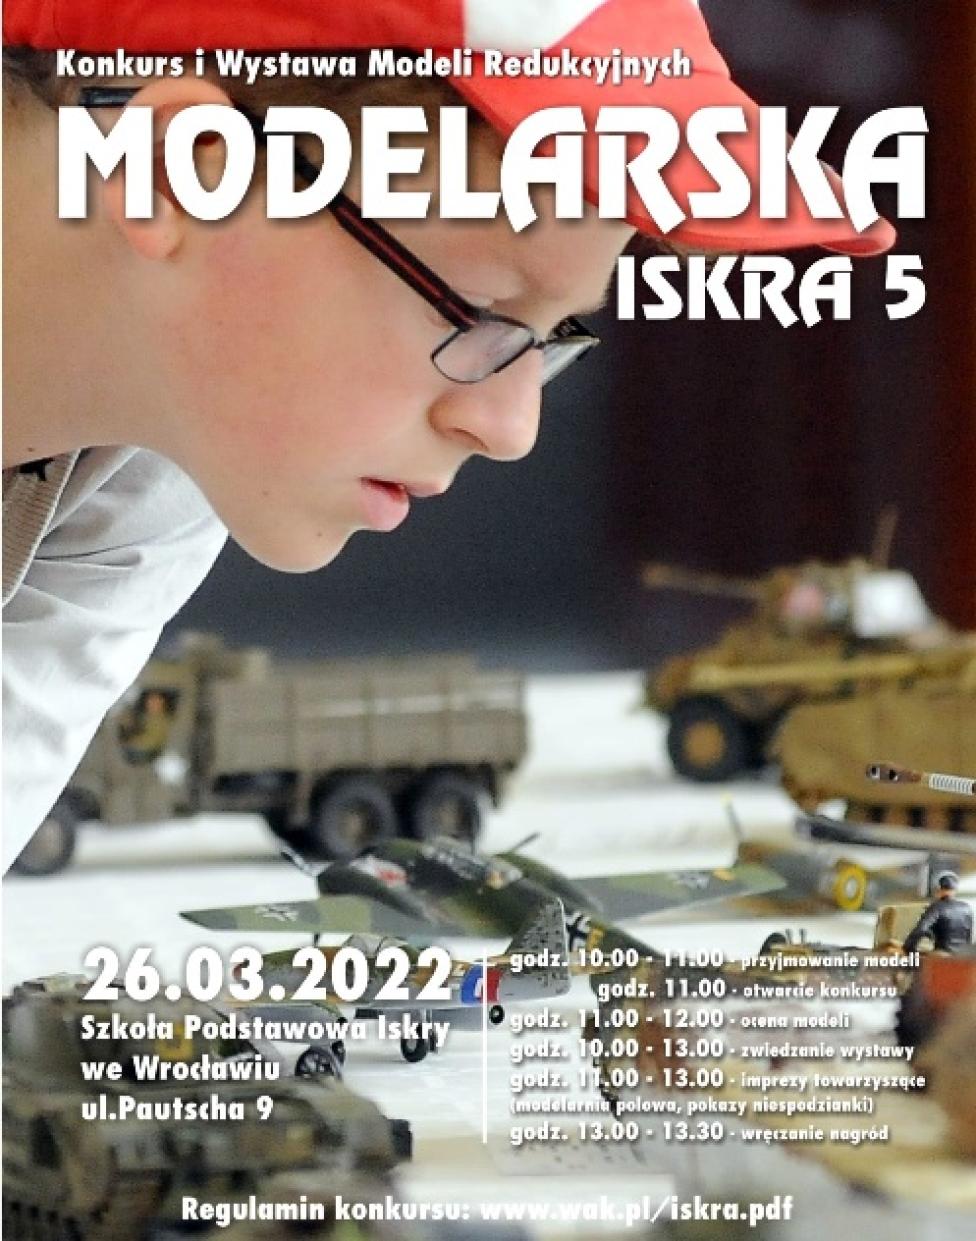 Modelarska Iskra 5 we Wrocławiu (fot. Modelarska Iskra)